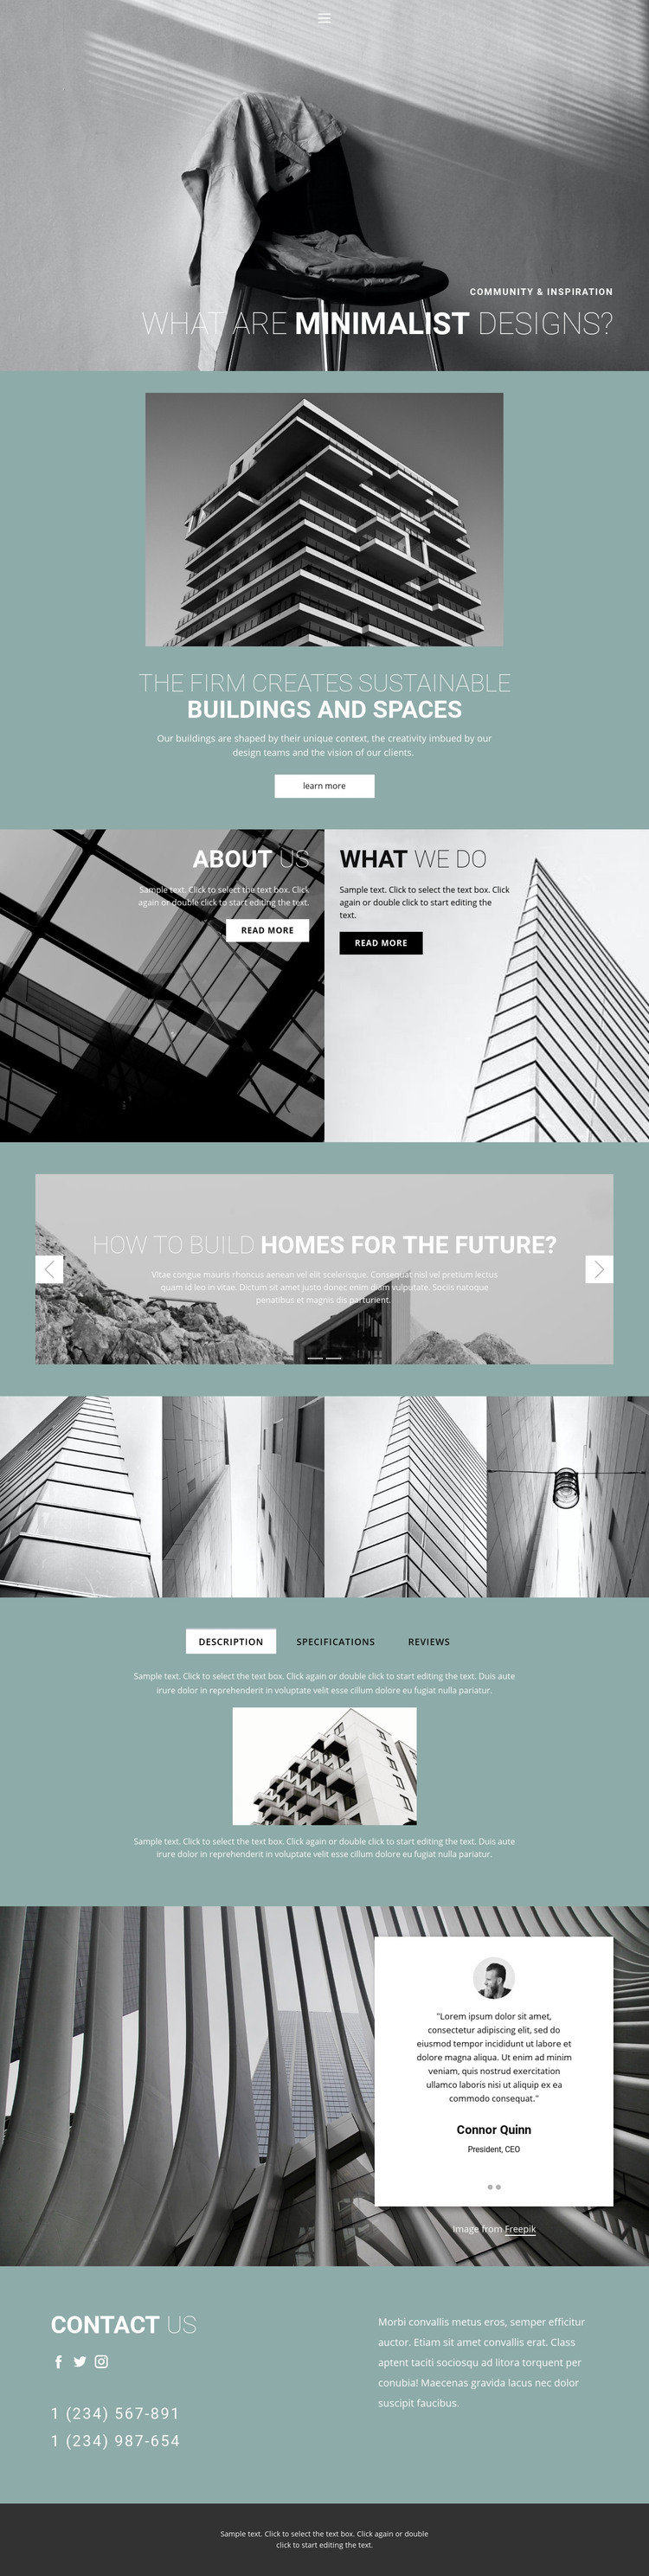 Perfect architecture ideas Homepage Design